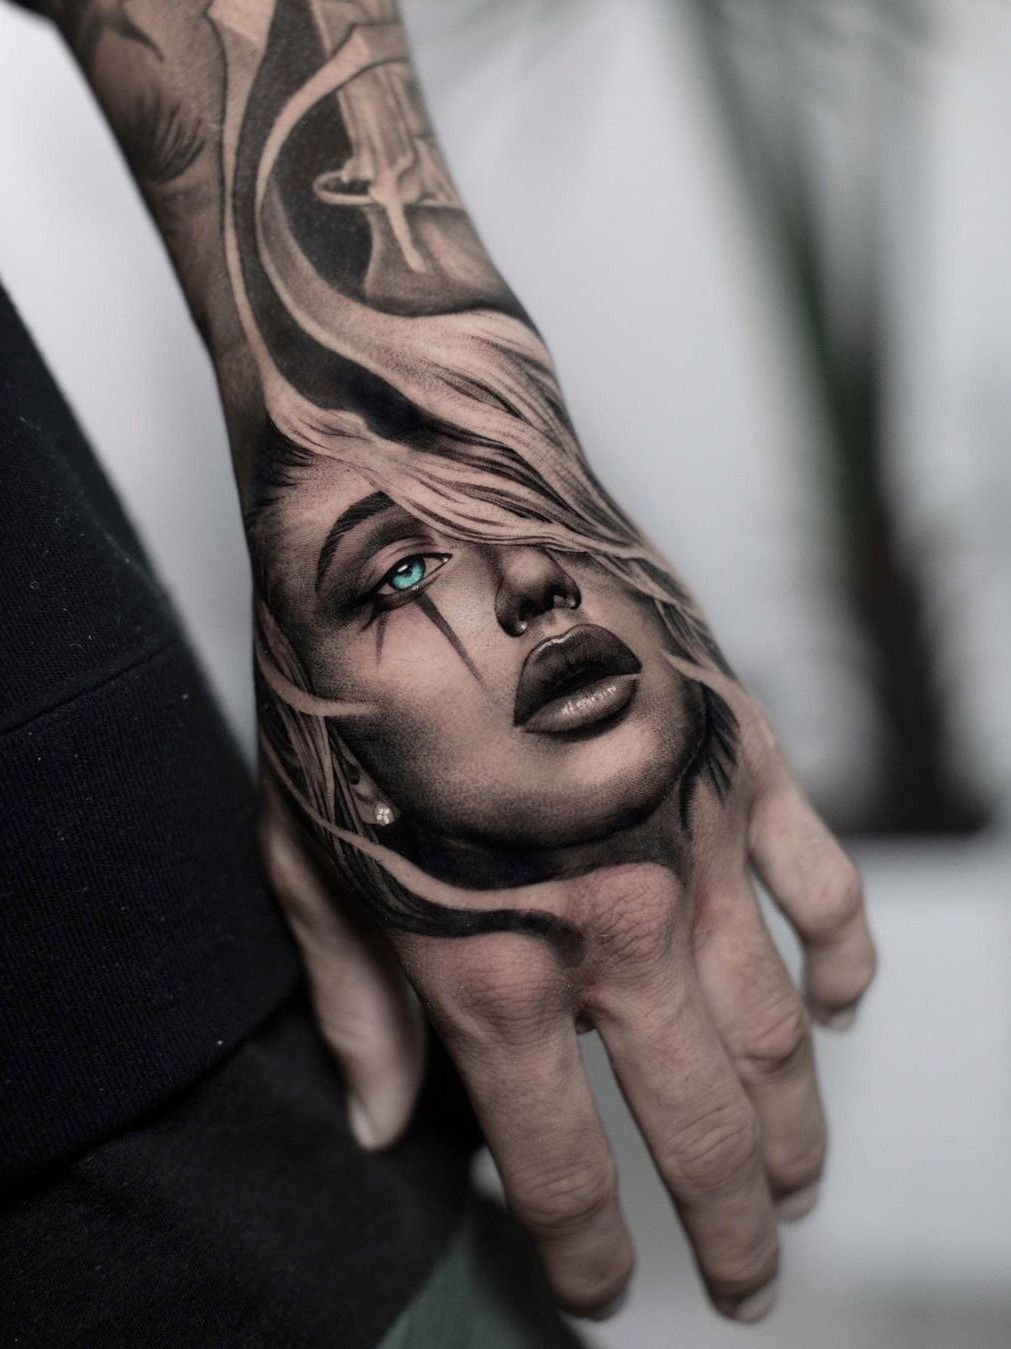 Tattoo uploaded by Anatta Vela • Hand tattoo by Daniel Silva #DanielSilva  #realism #blackandgrey #handtattoo #portrait #lady #lips #eye • Tattoodo